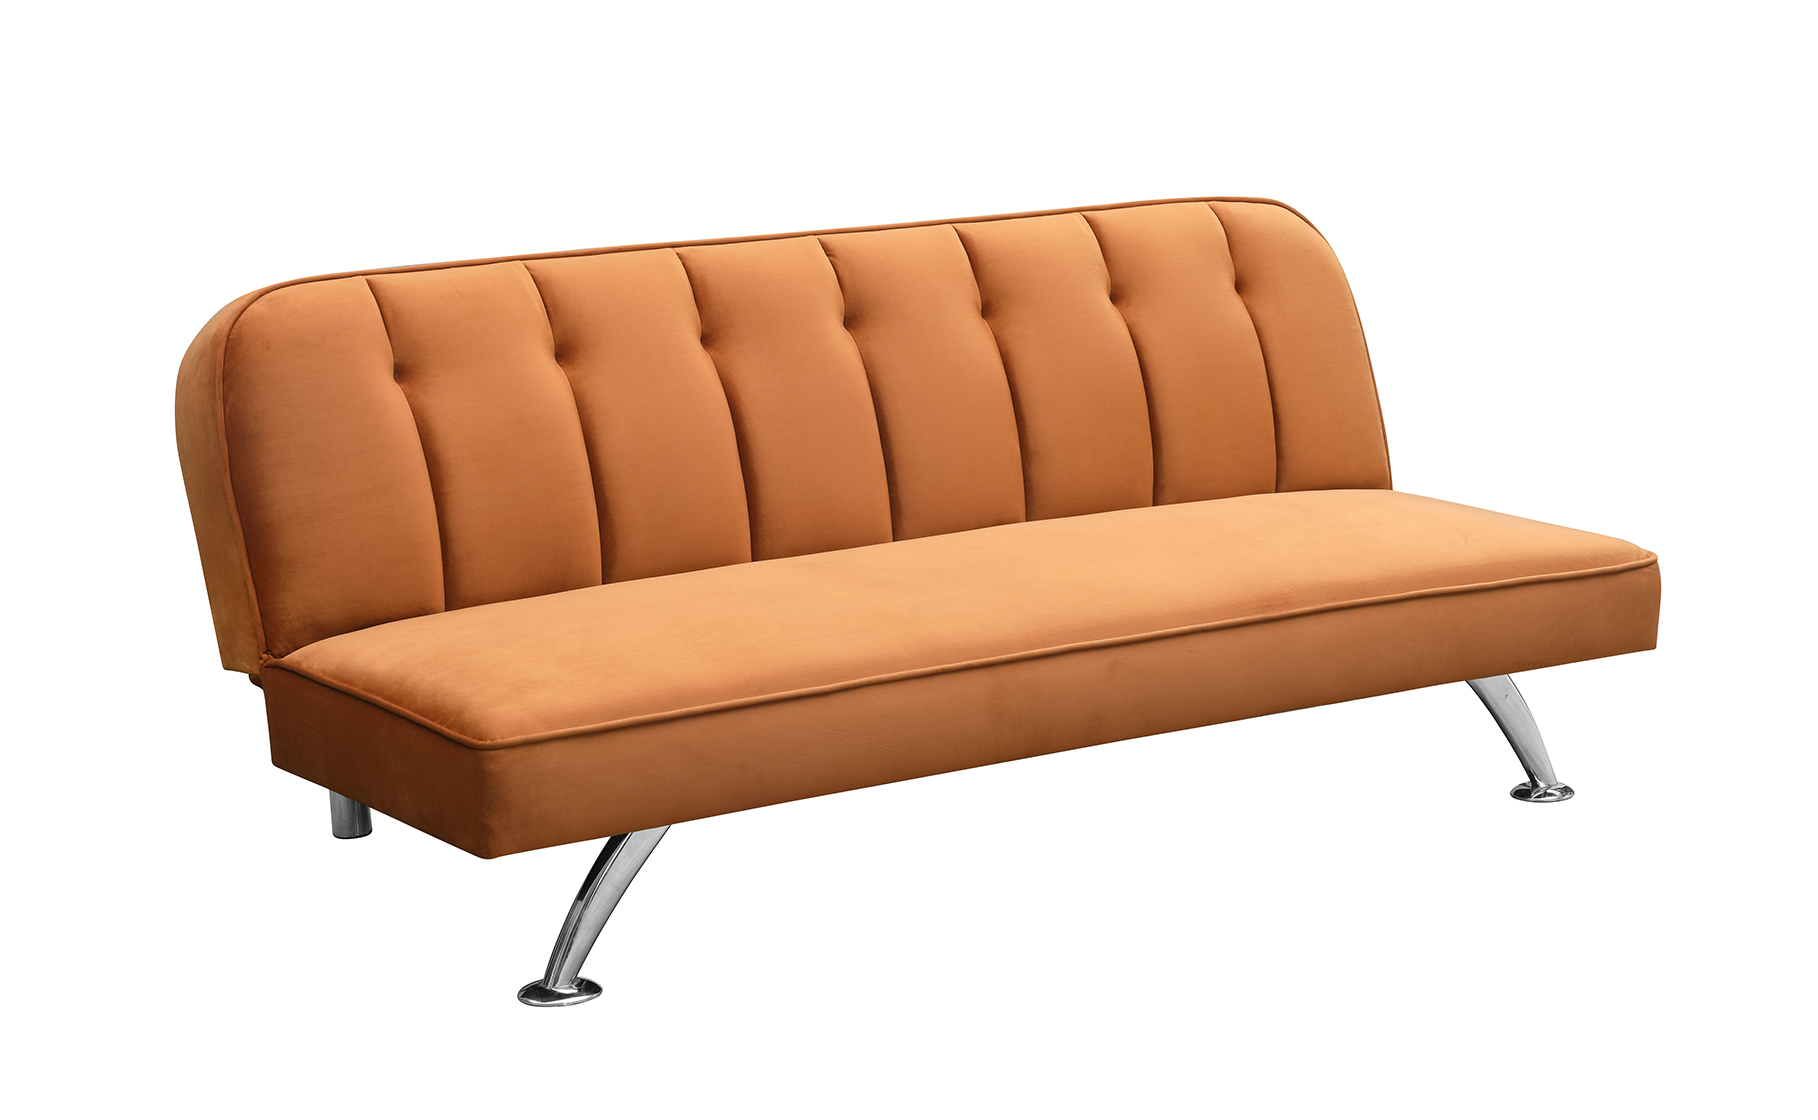 orange sofa bed uk